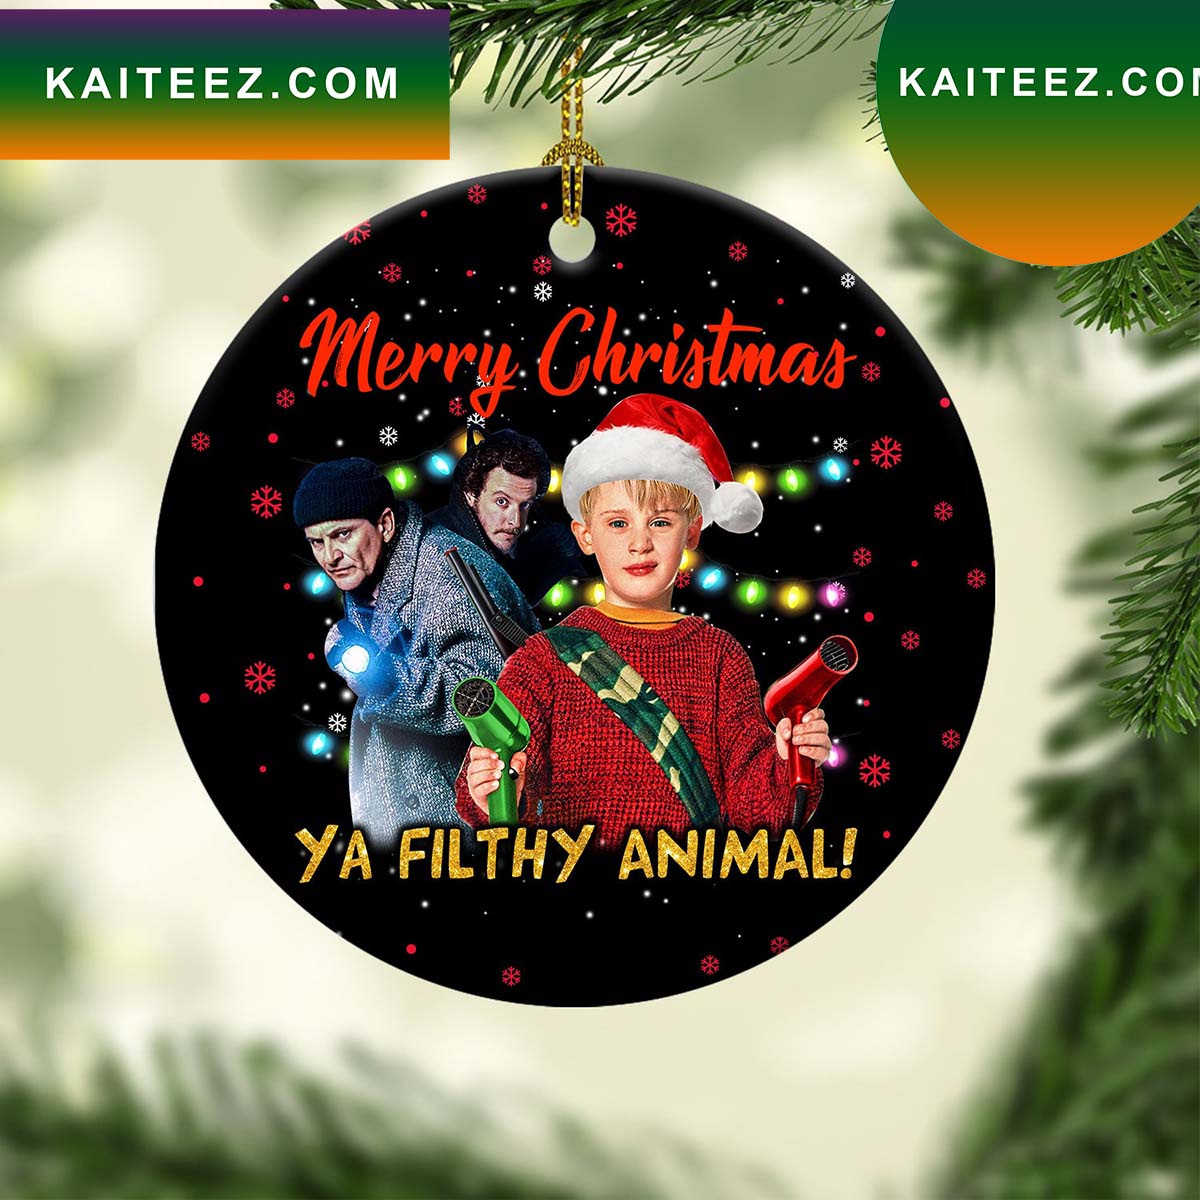 Merry Christmas Ya Filthy Animal Home Alone Ornament - Kaiteez